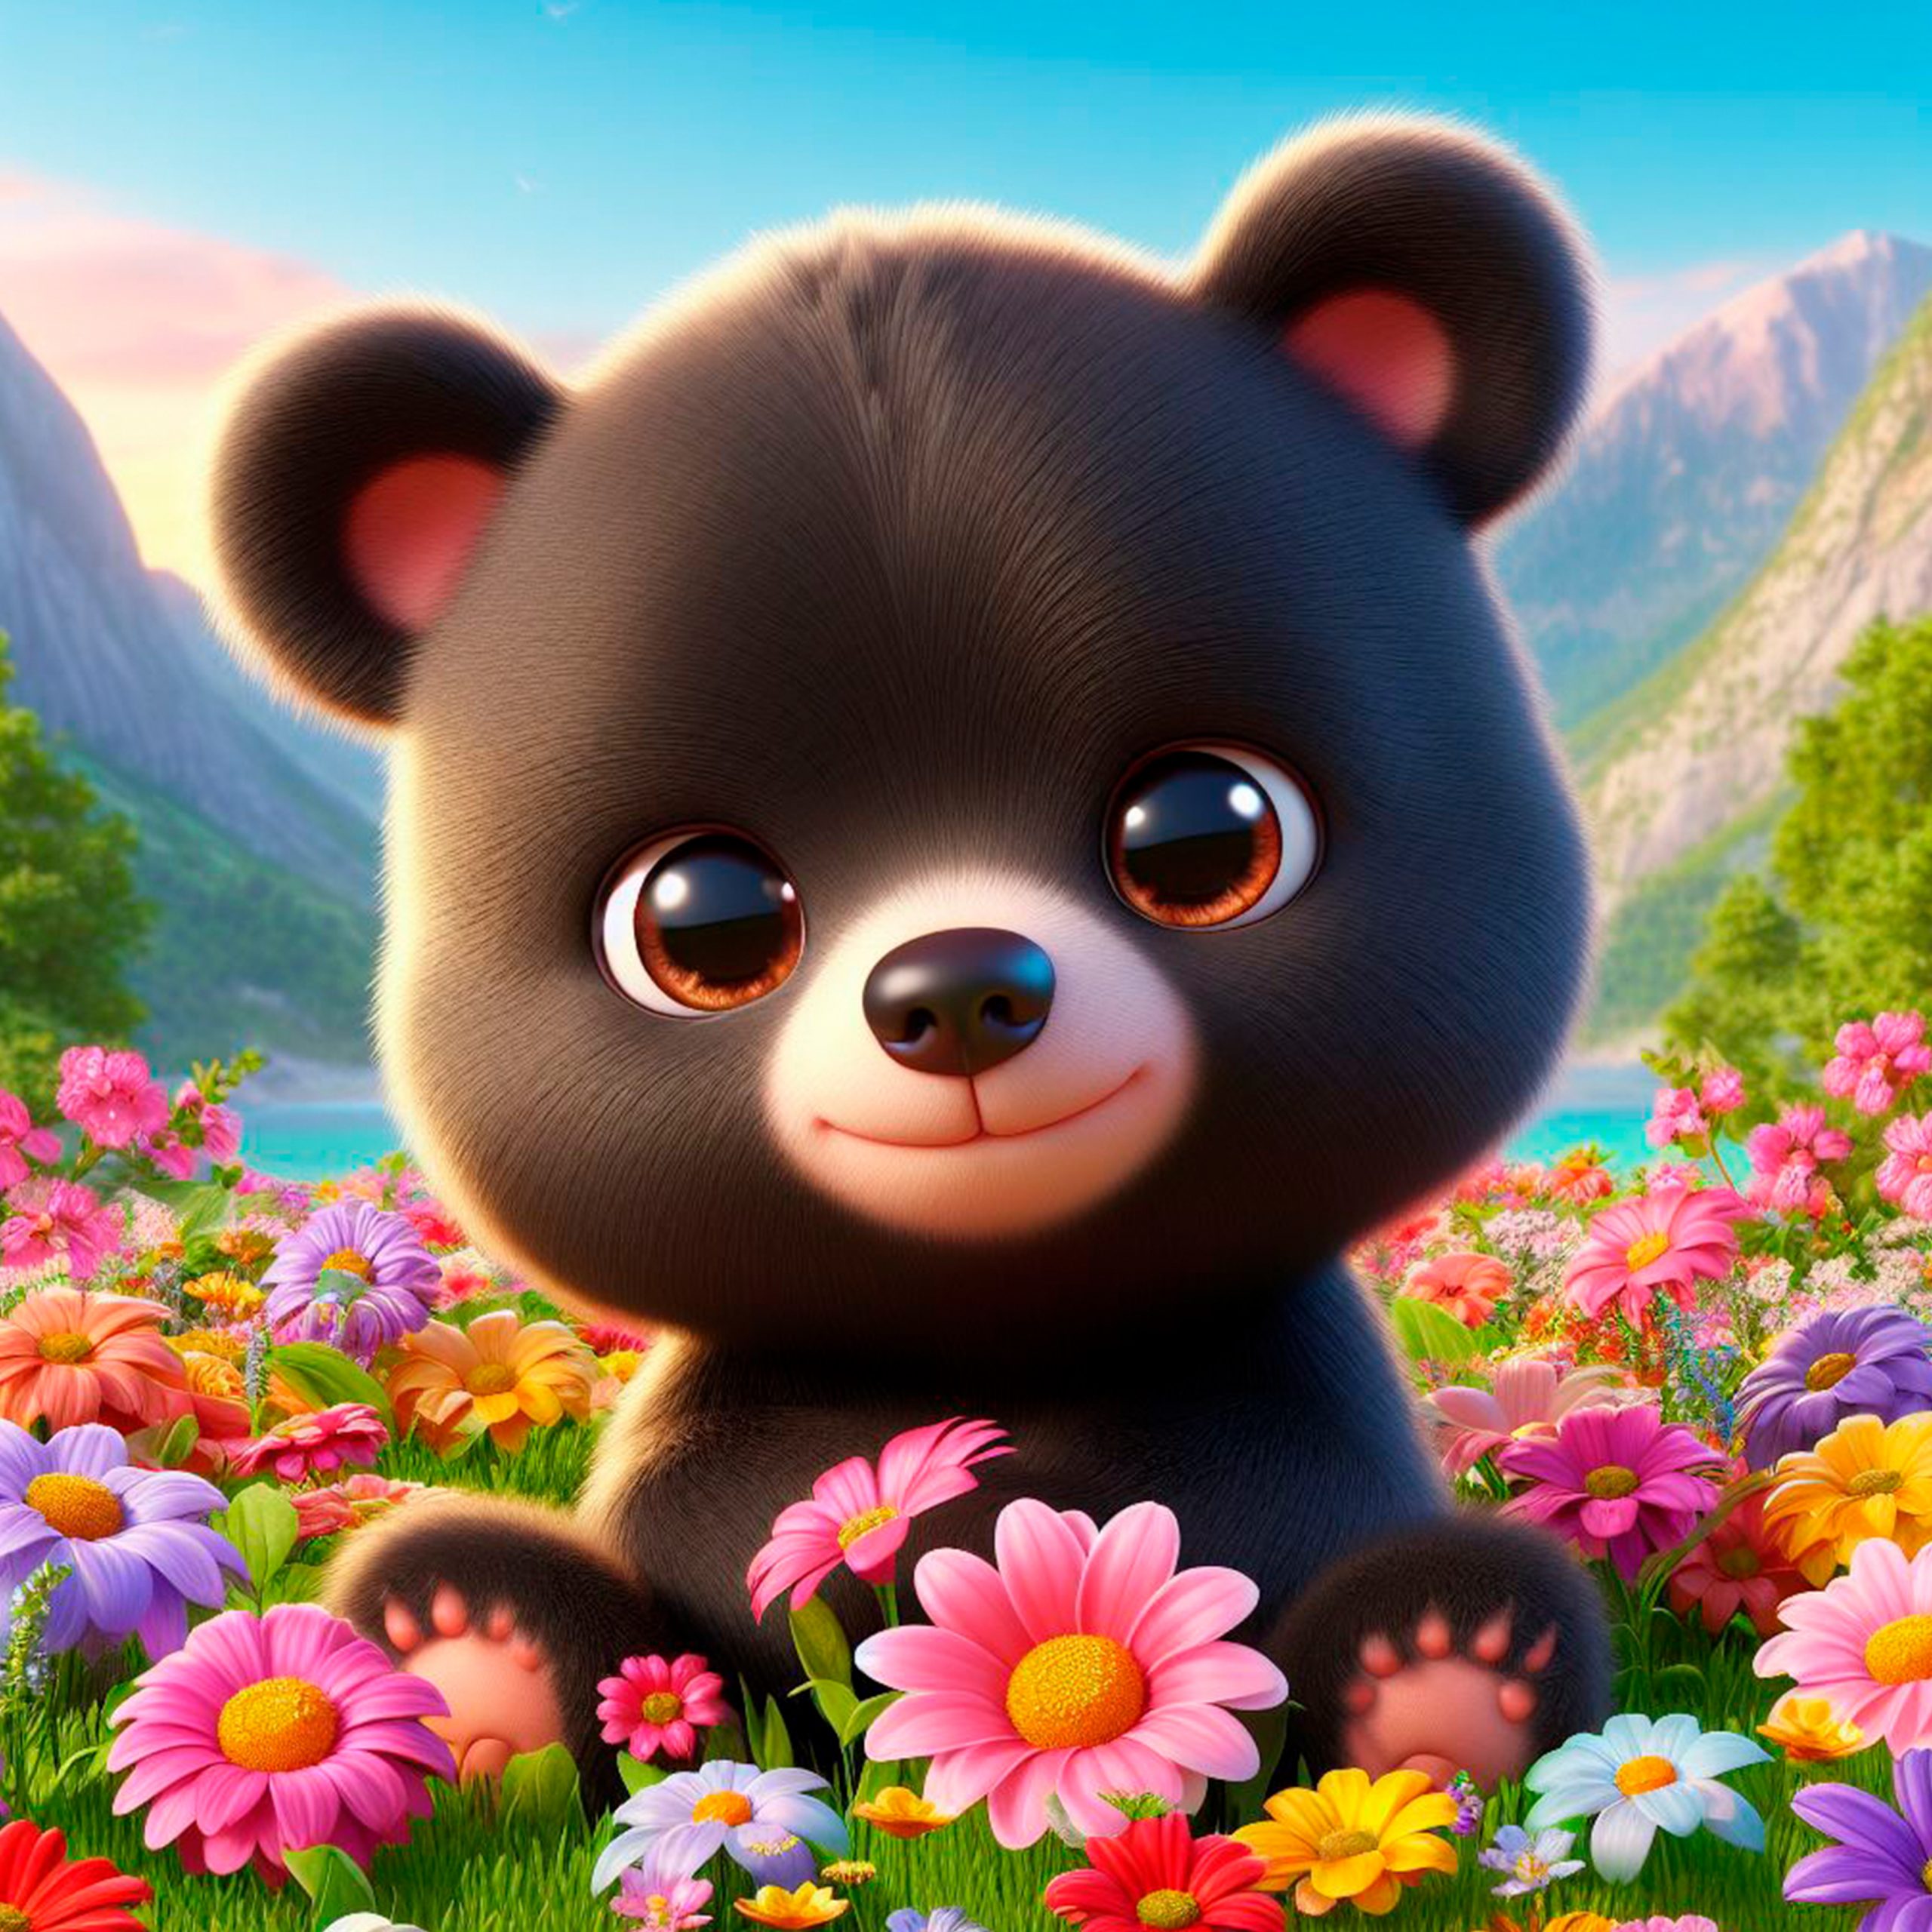 Lindo oso bebé de color café oscuro con ojos grandes, entre un campo de flores de colores